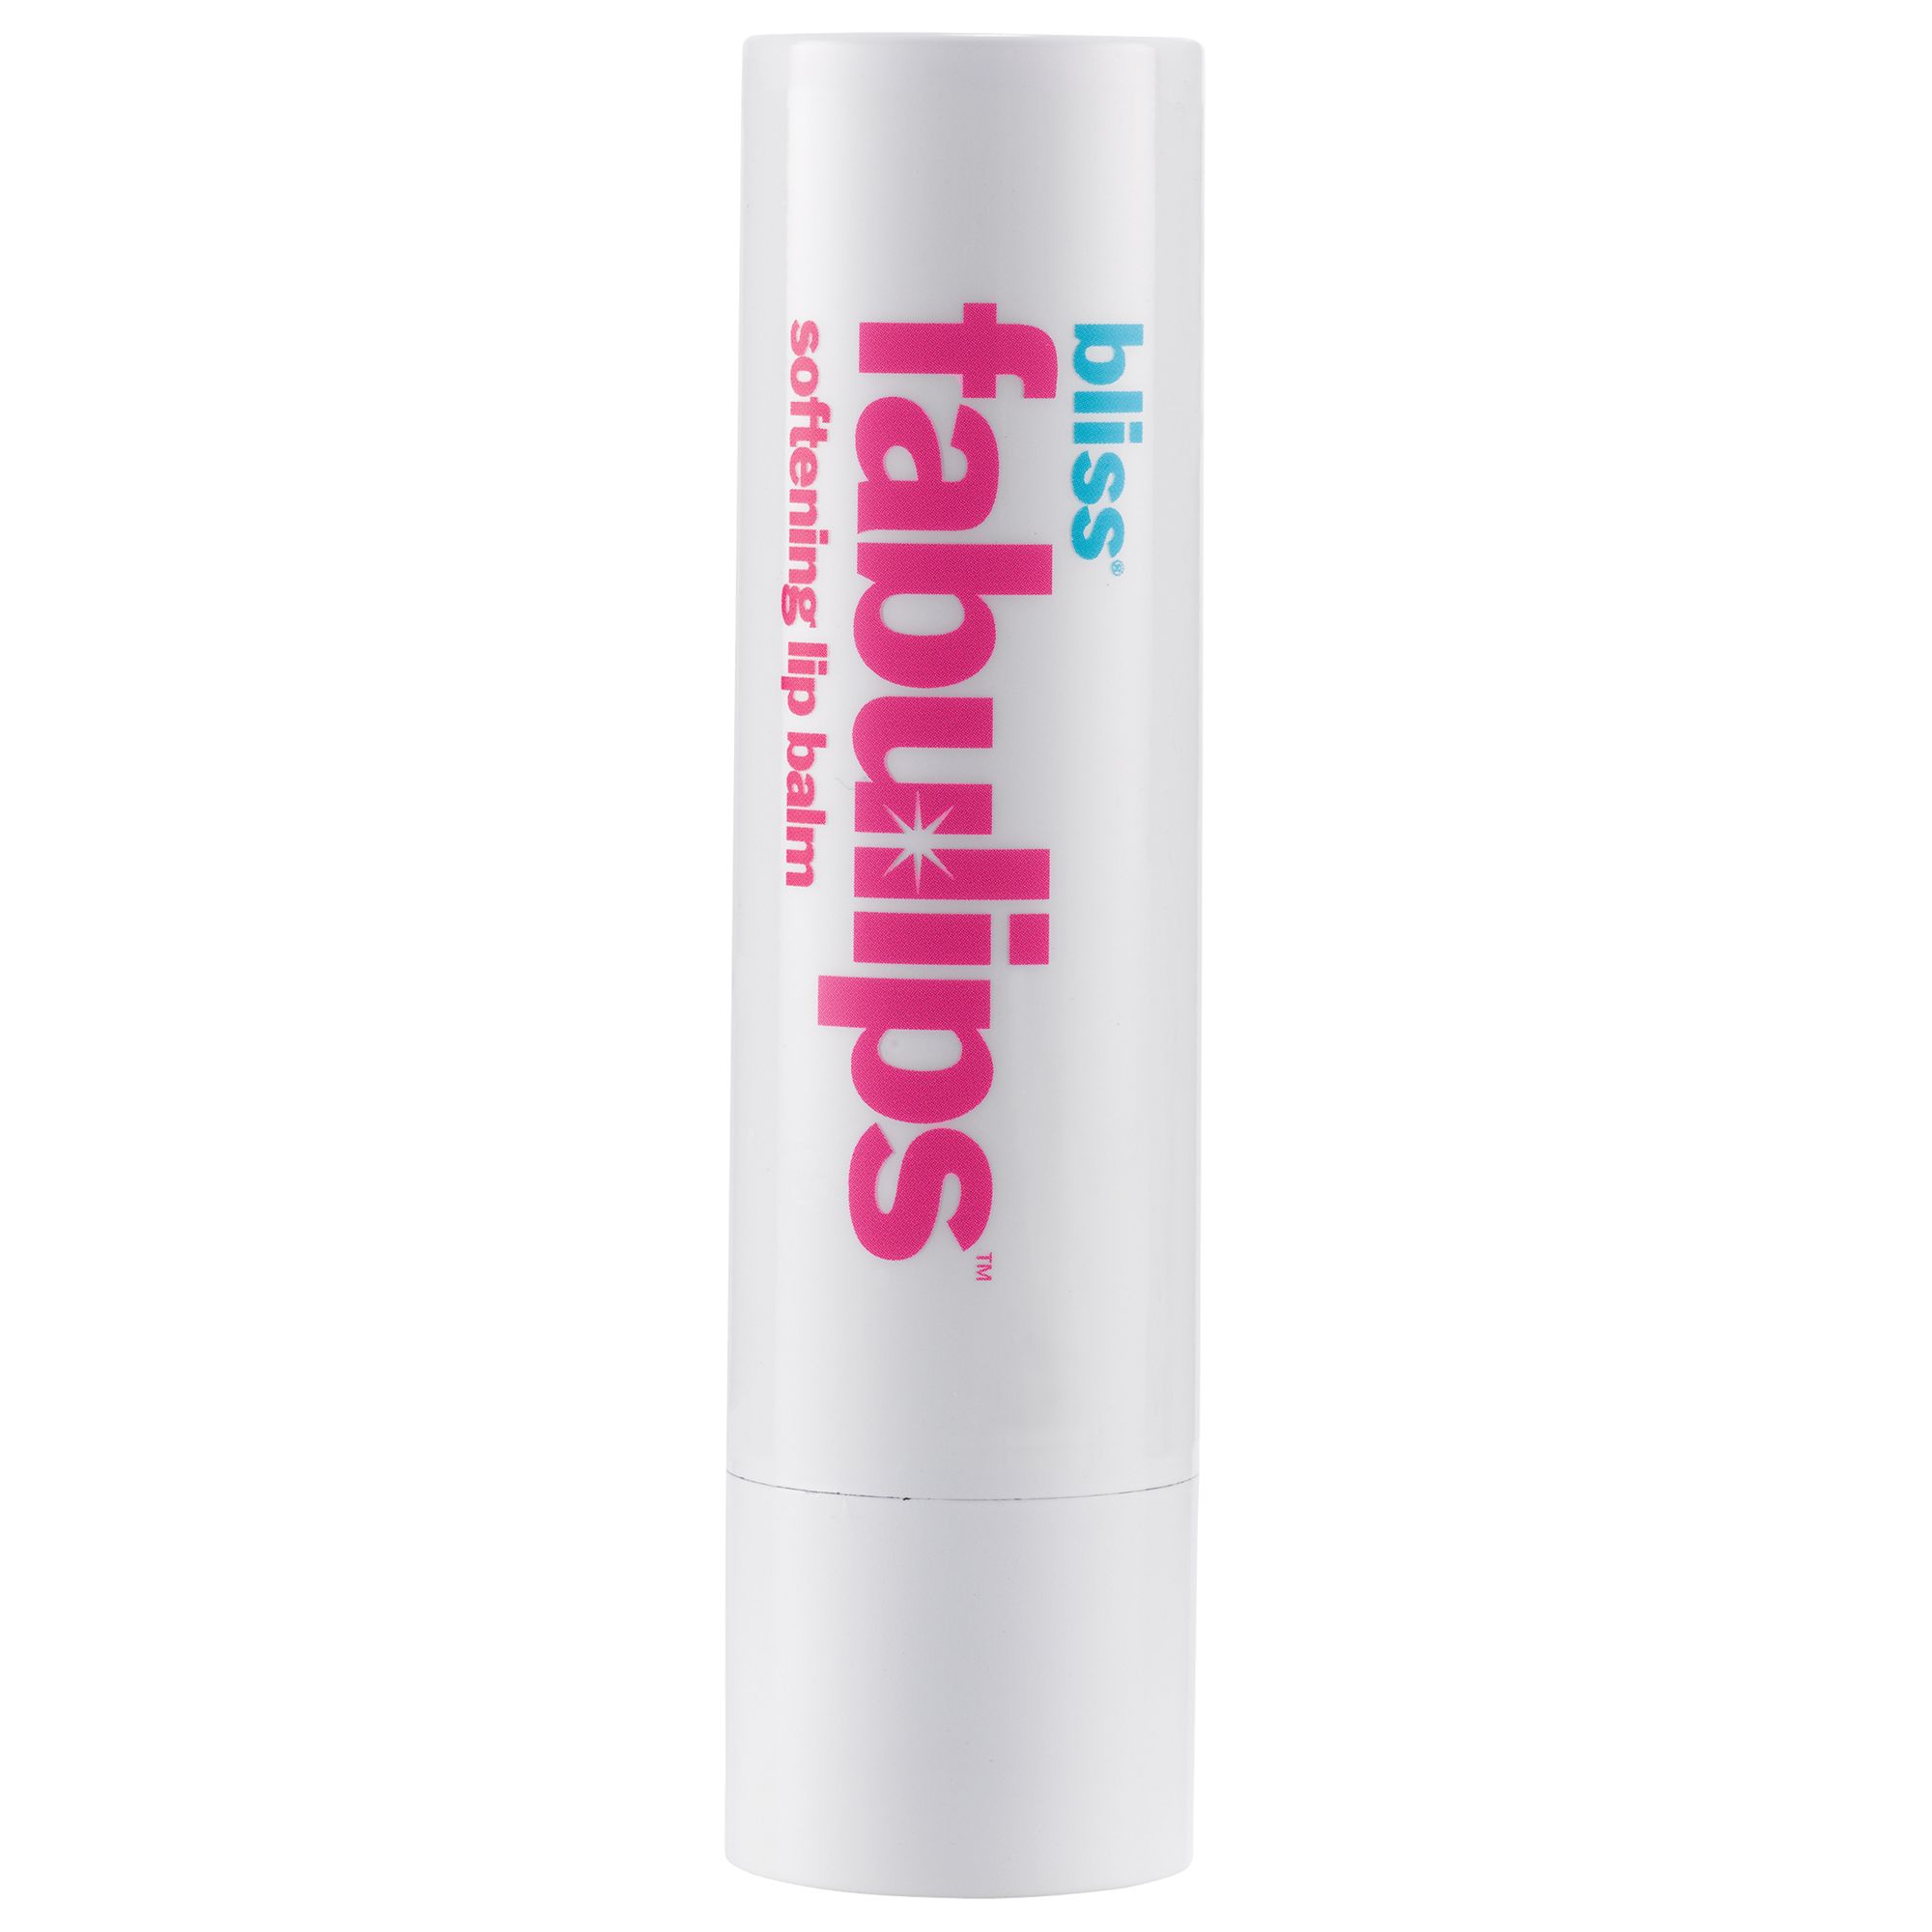 shop for Bliss Fabulips Lip Balm, 3.5ml at Shopo